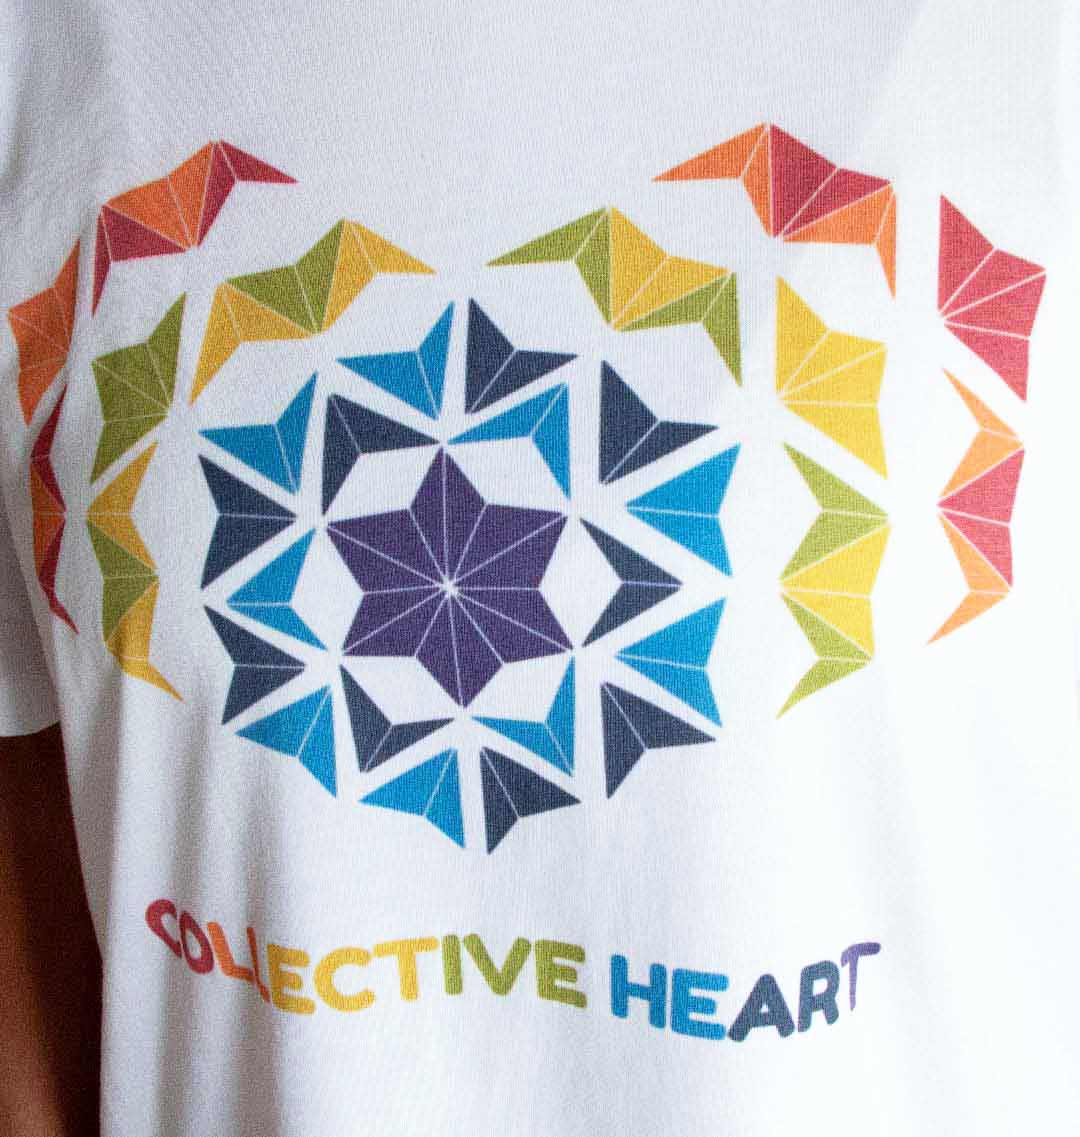 Collective Heart Women classic T-shirt W